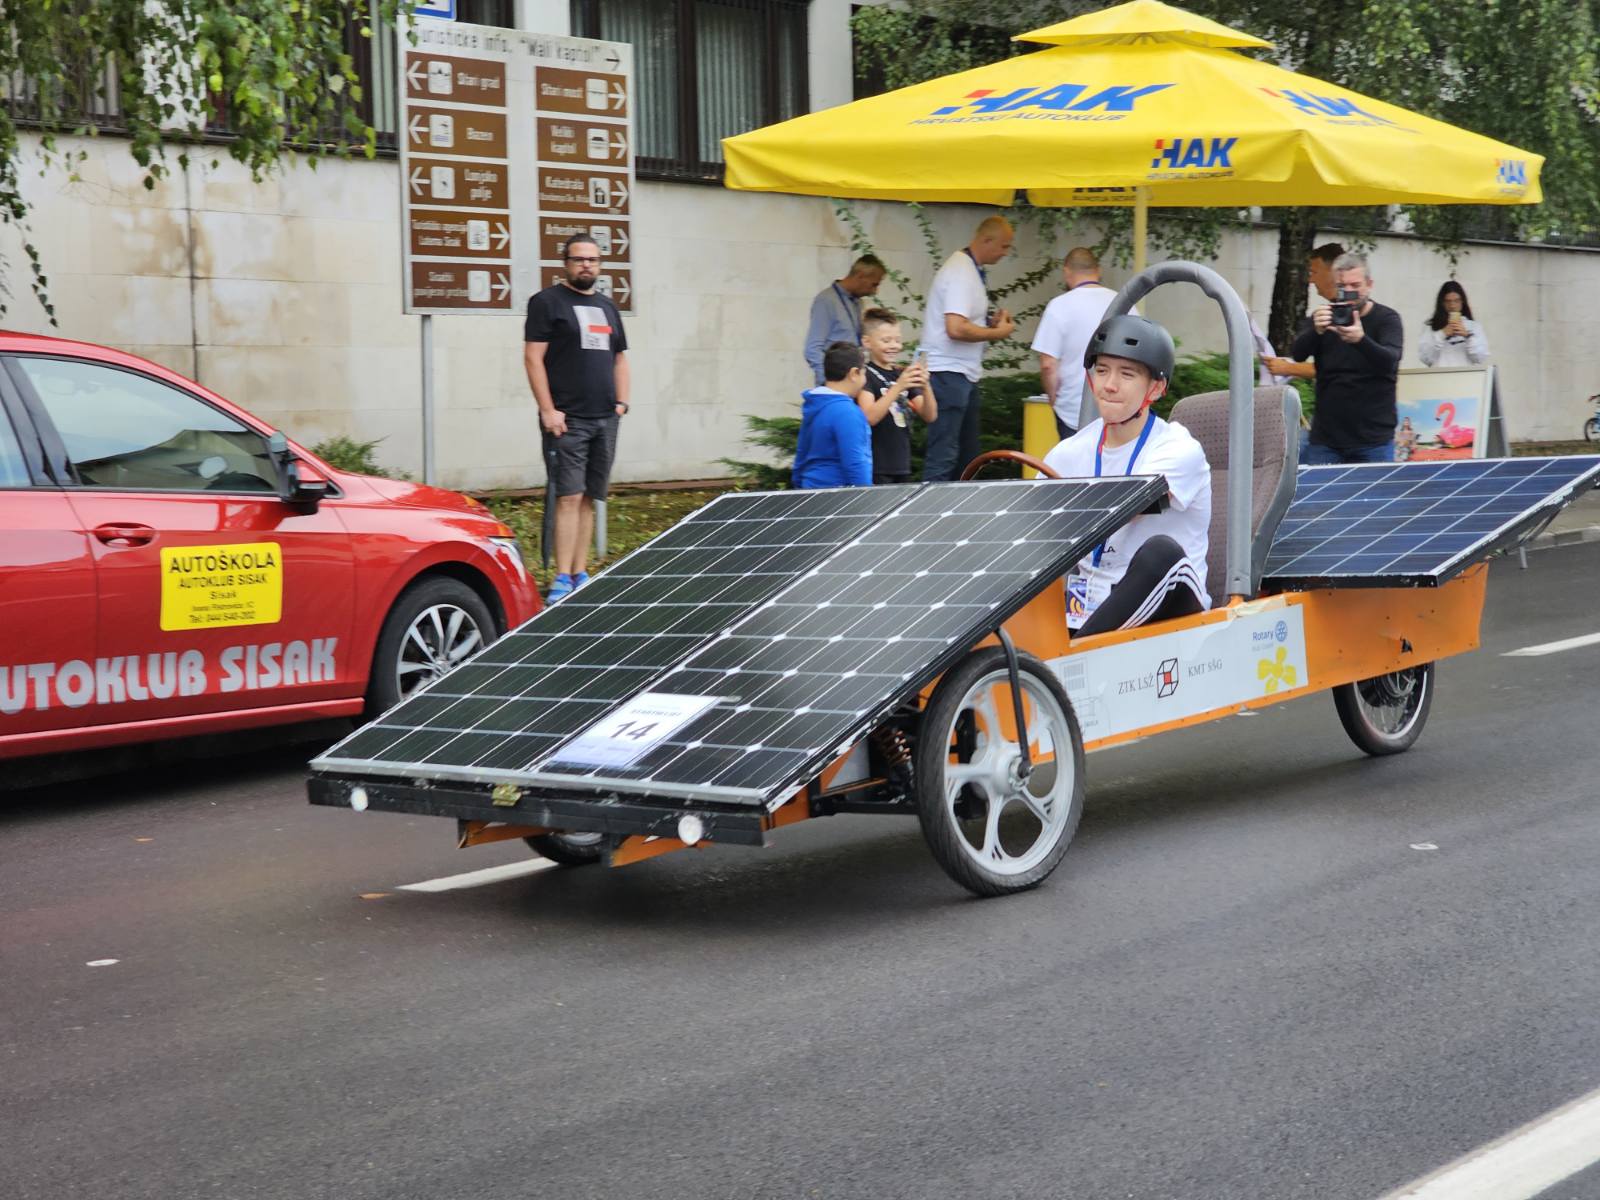 Tehnička škola Sisak organizirala je u Sisku 10. utrku solarnih automobila SOELA.